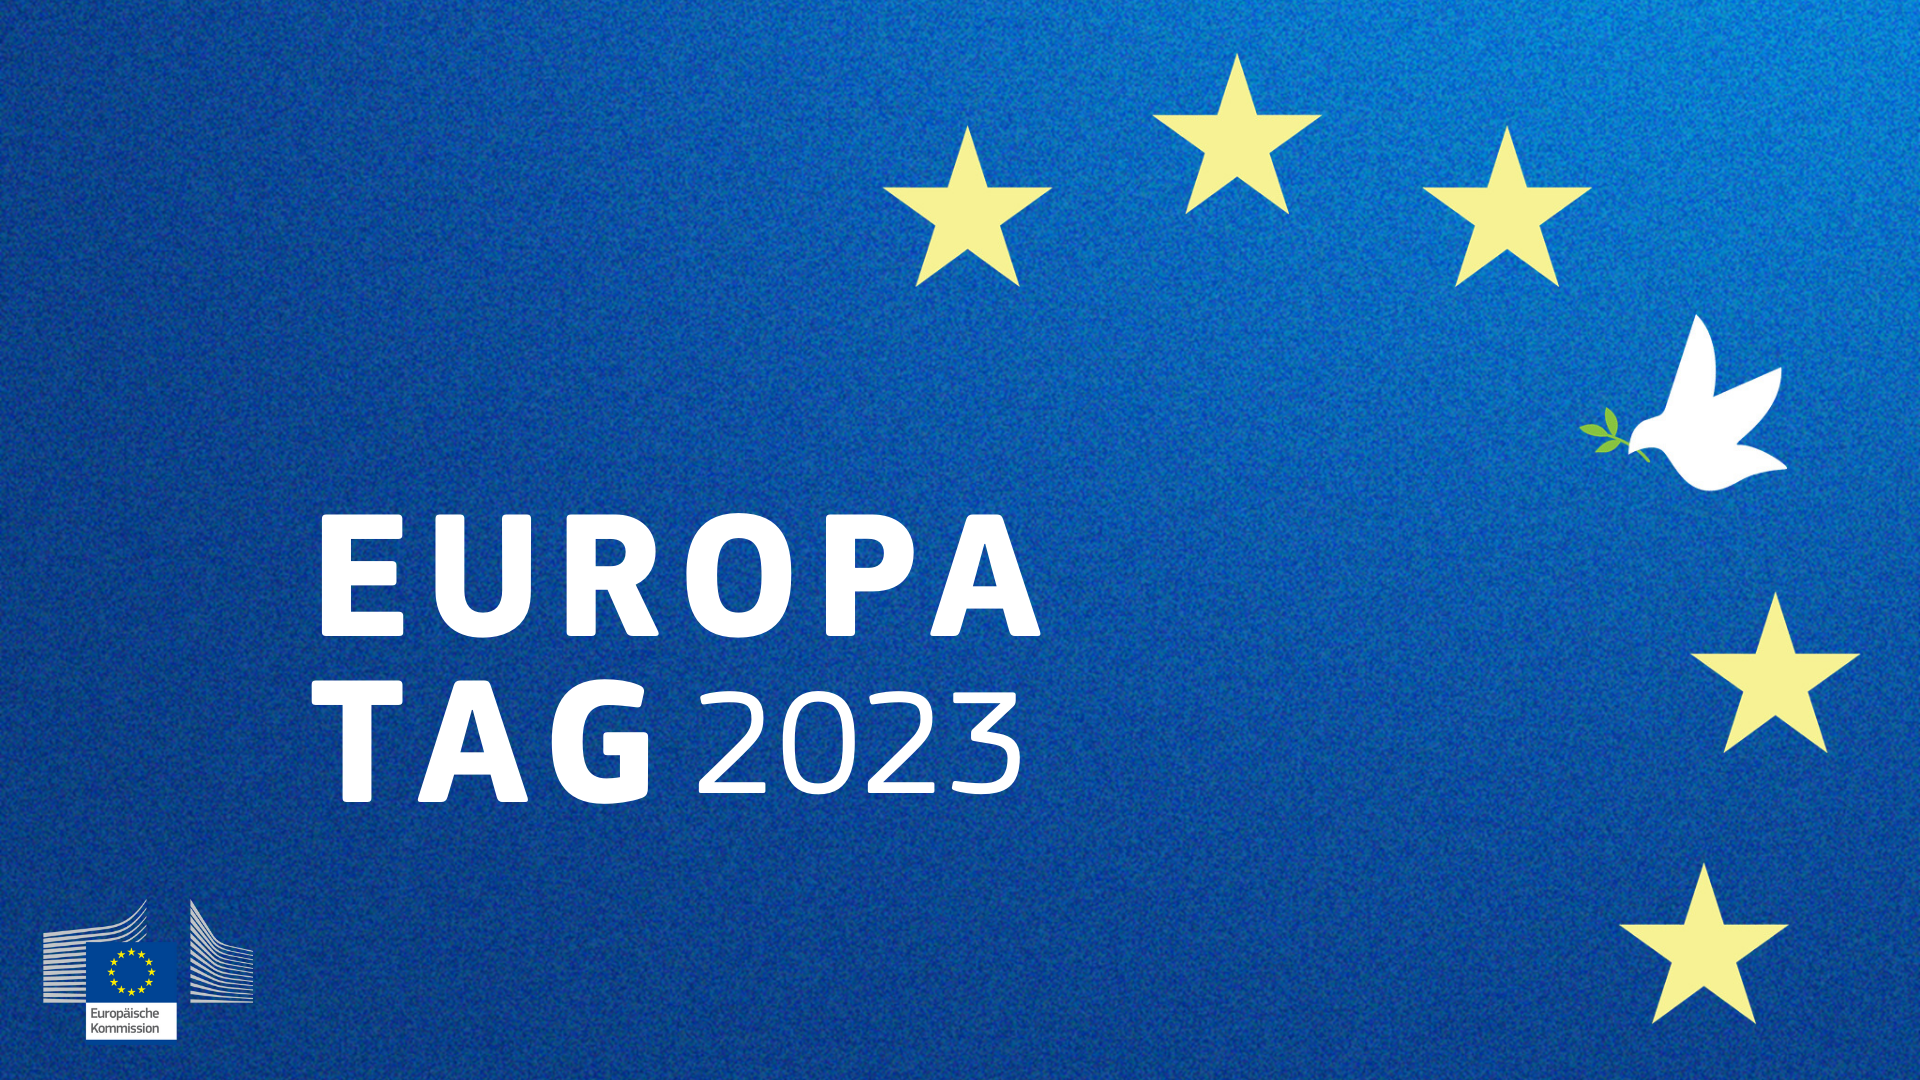 Europatag 2023